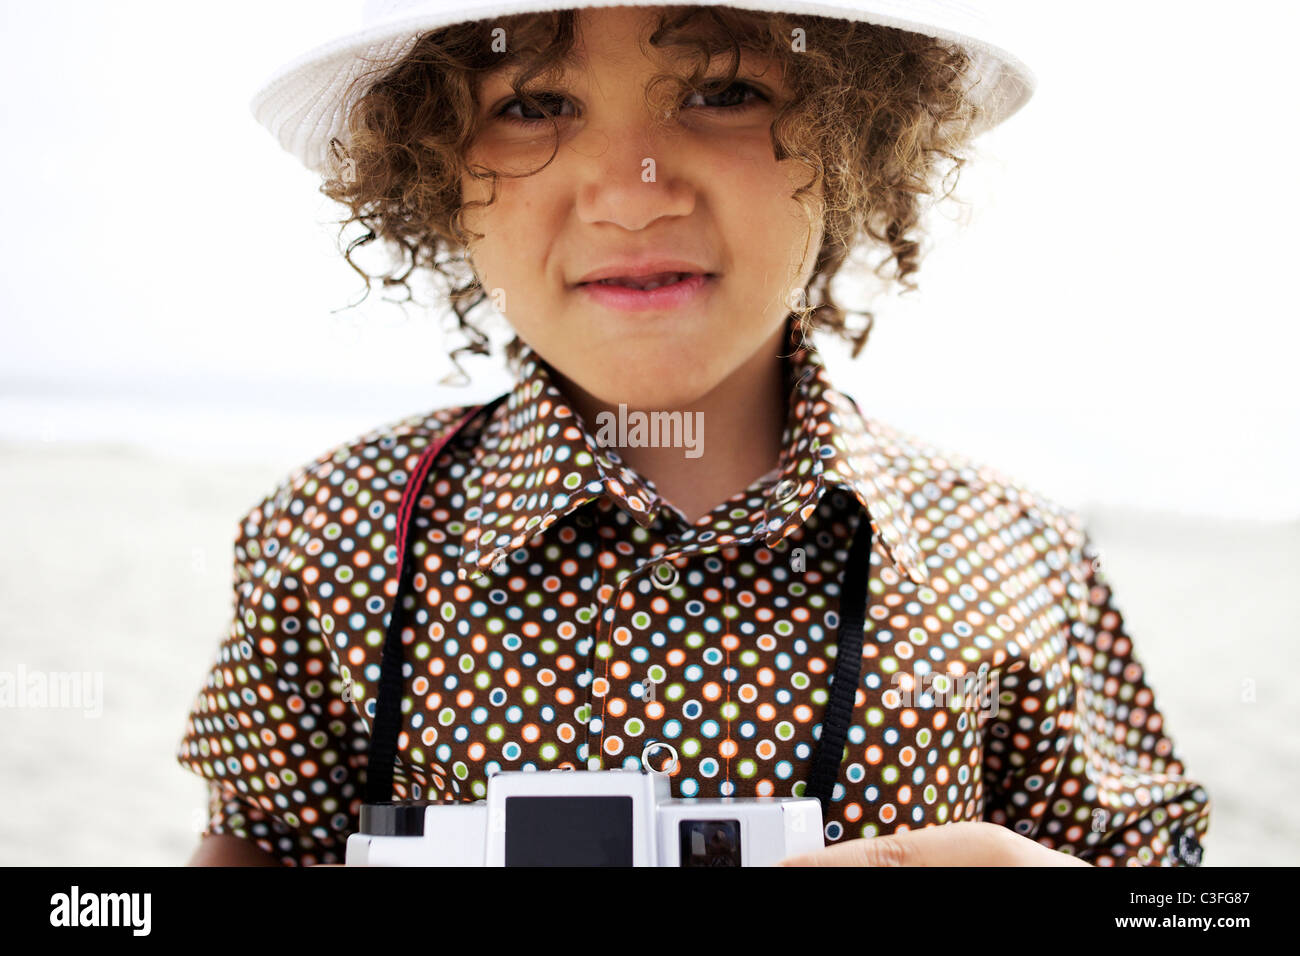 Mixed race boy using old-fashioned camera Stock Photo